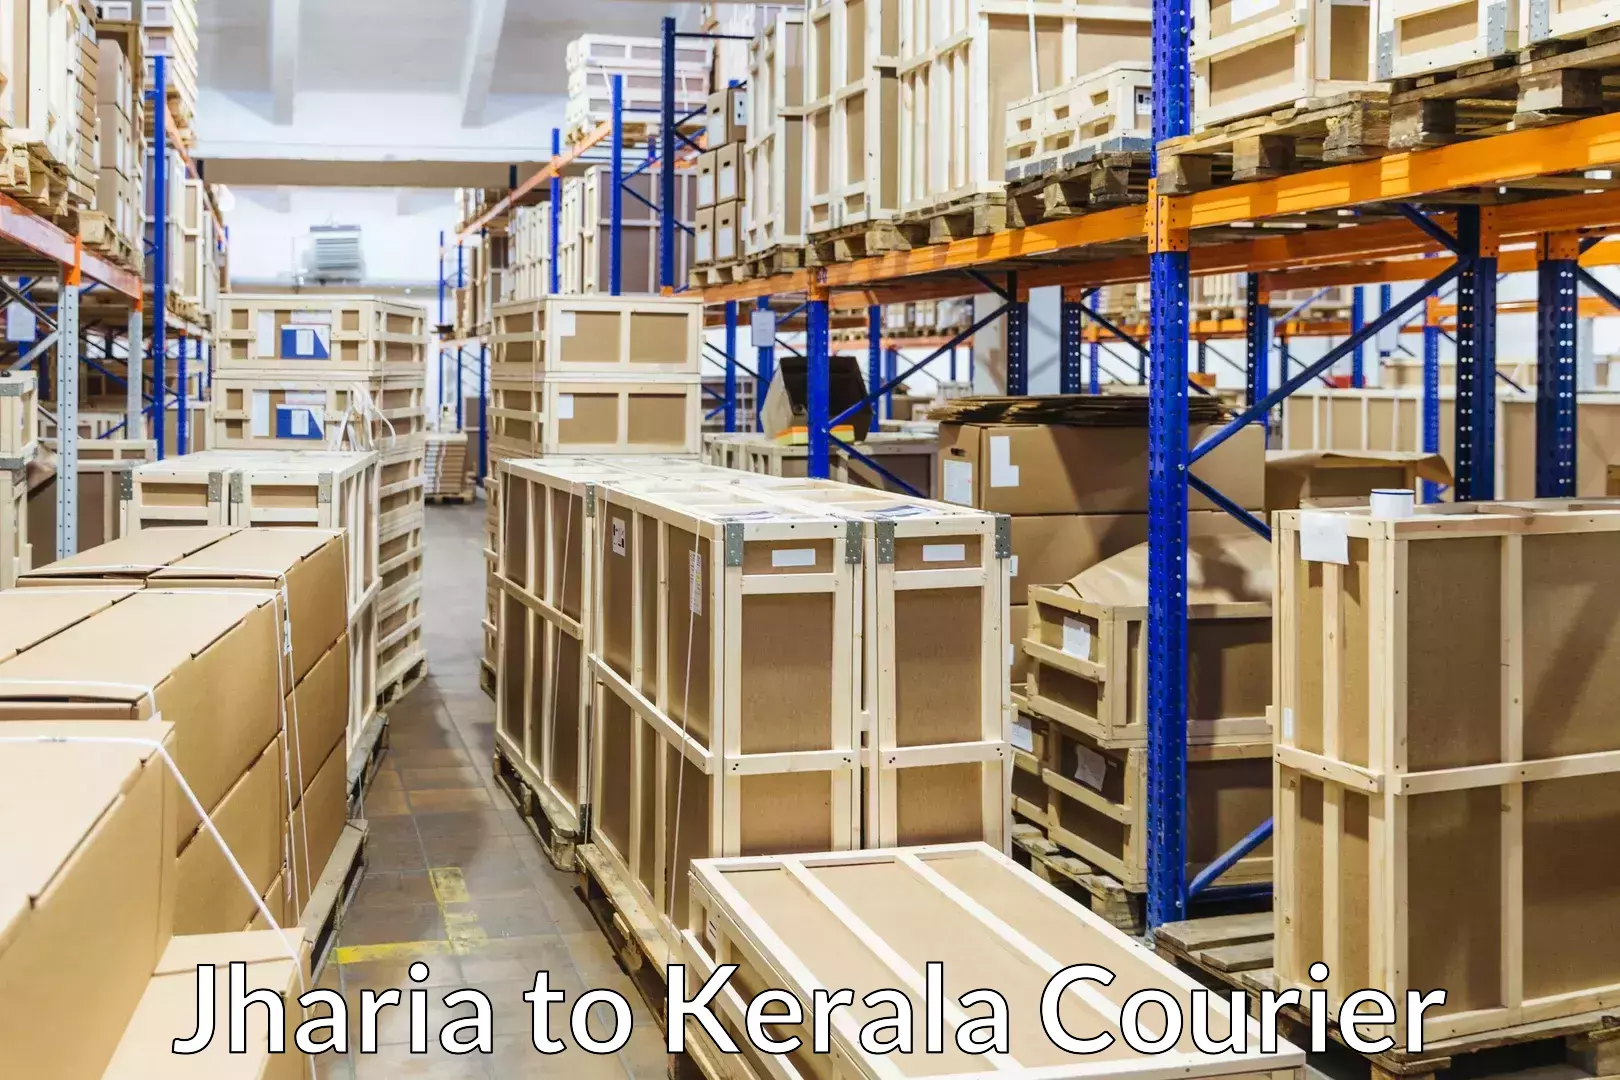 Professional moving company Jharia to Kerala